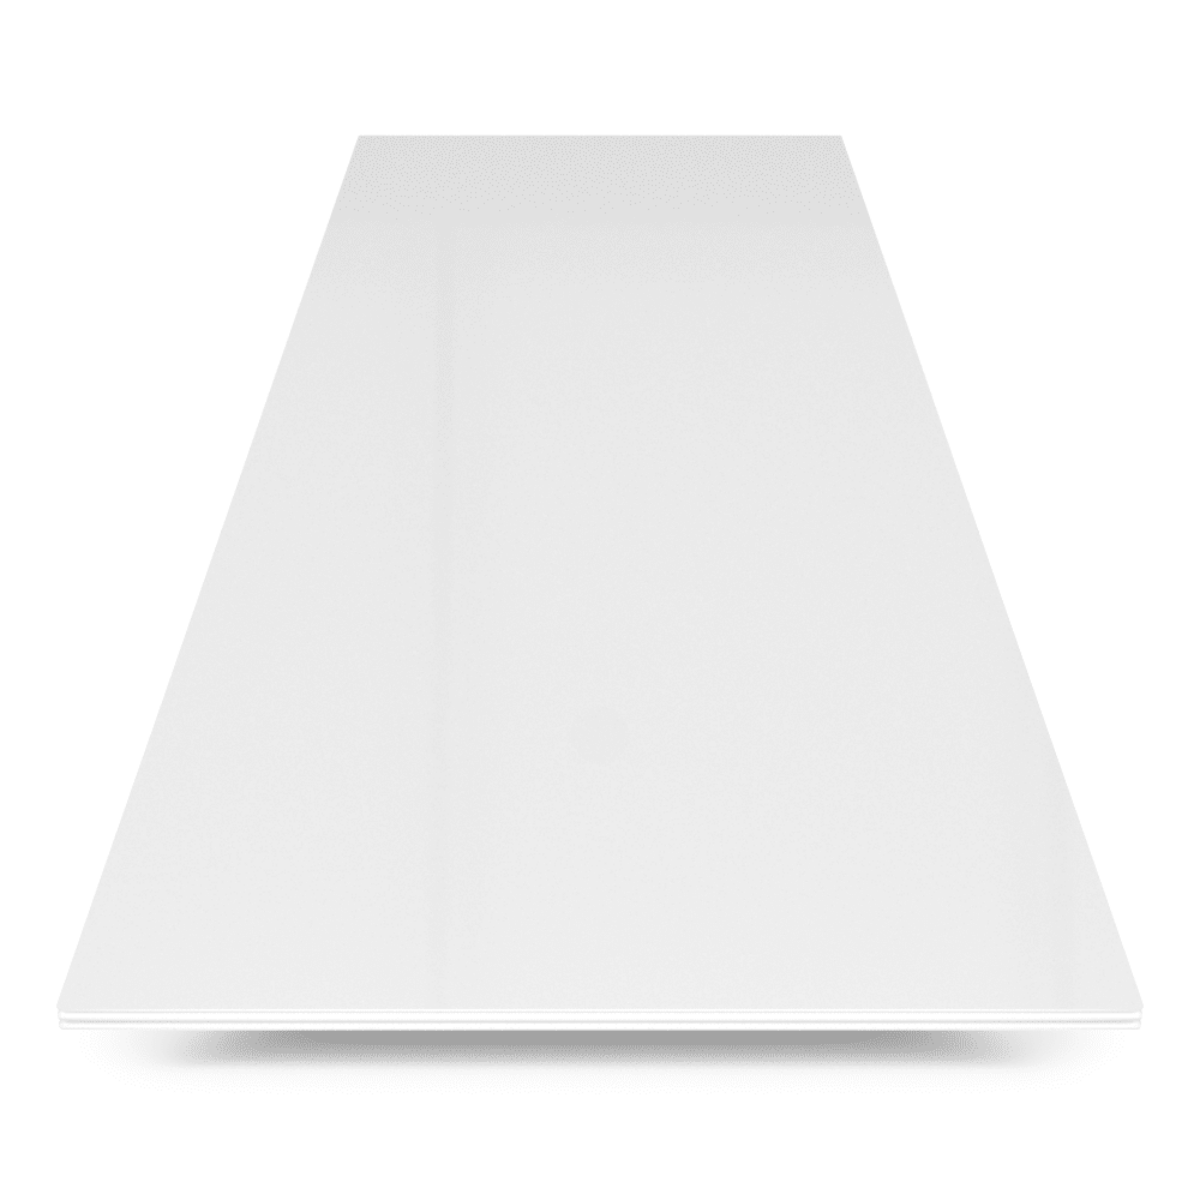 White Plastic PVC Wall Cladding Sheets/Panels Kitchen 10 x 8ft x 4ft x 1.5mm 